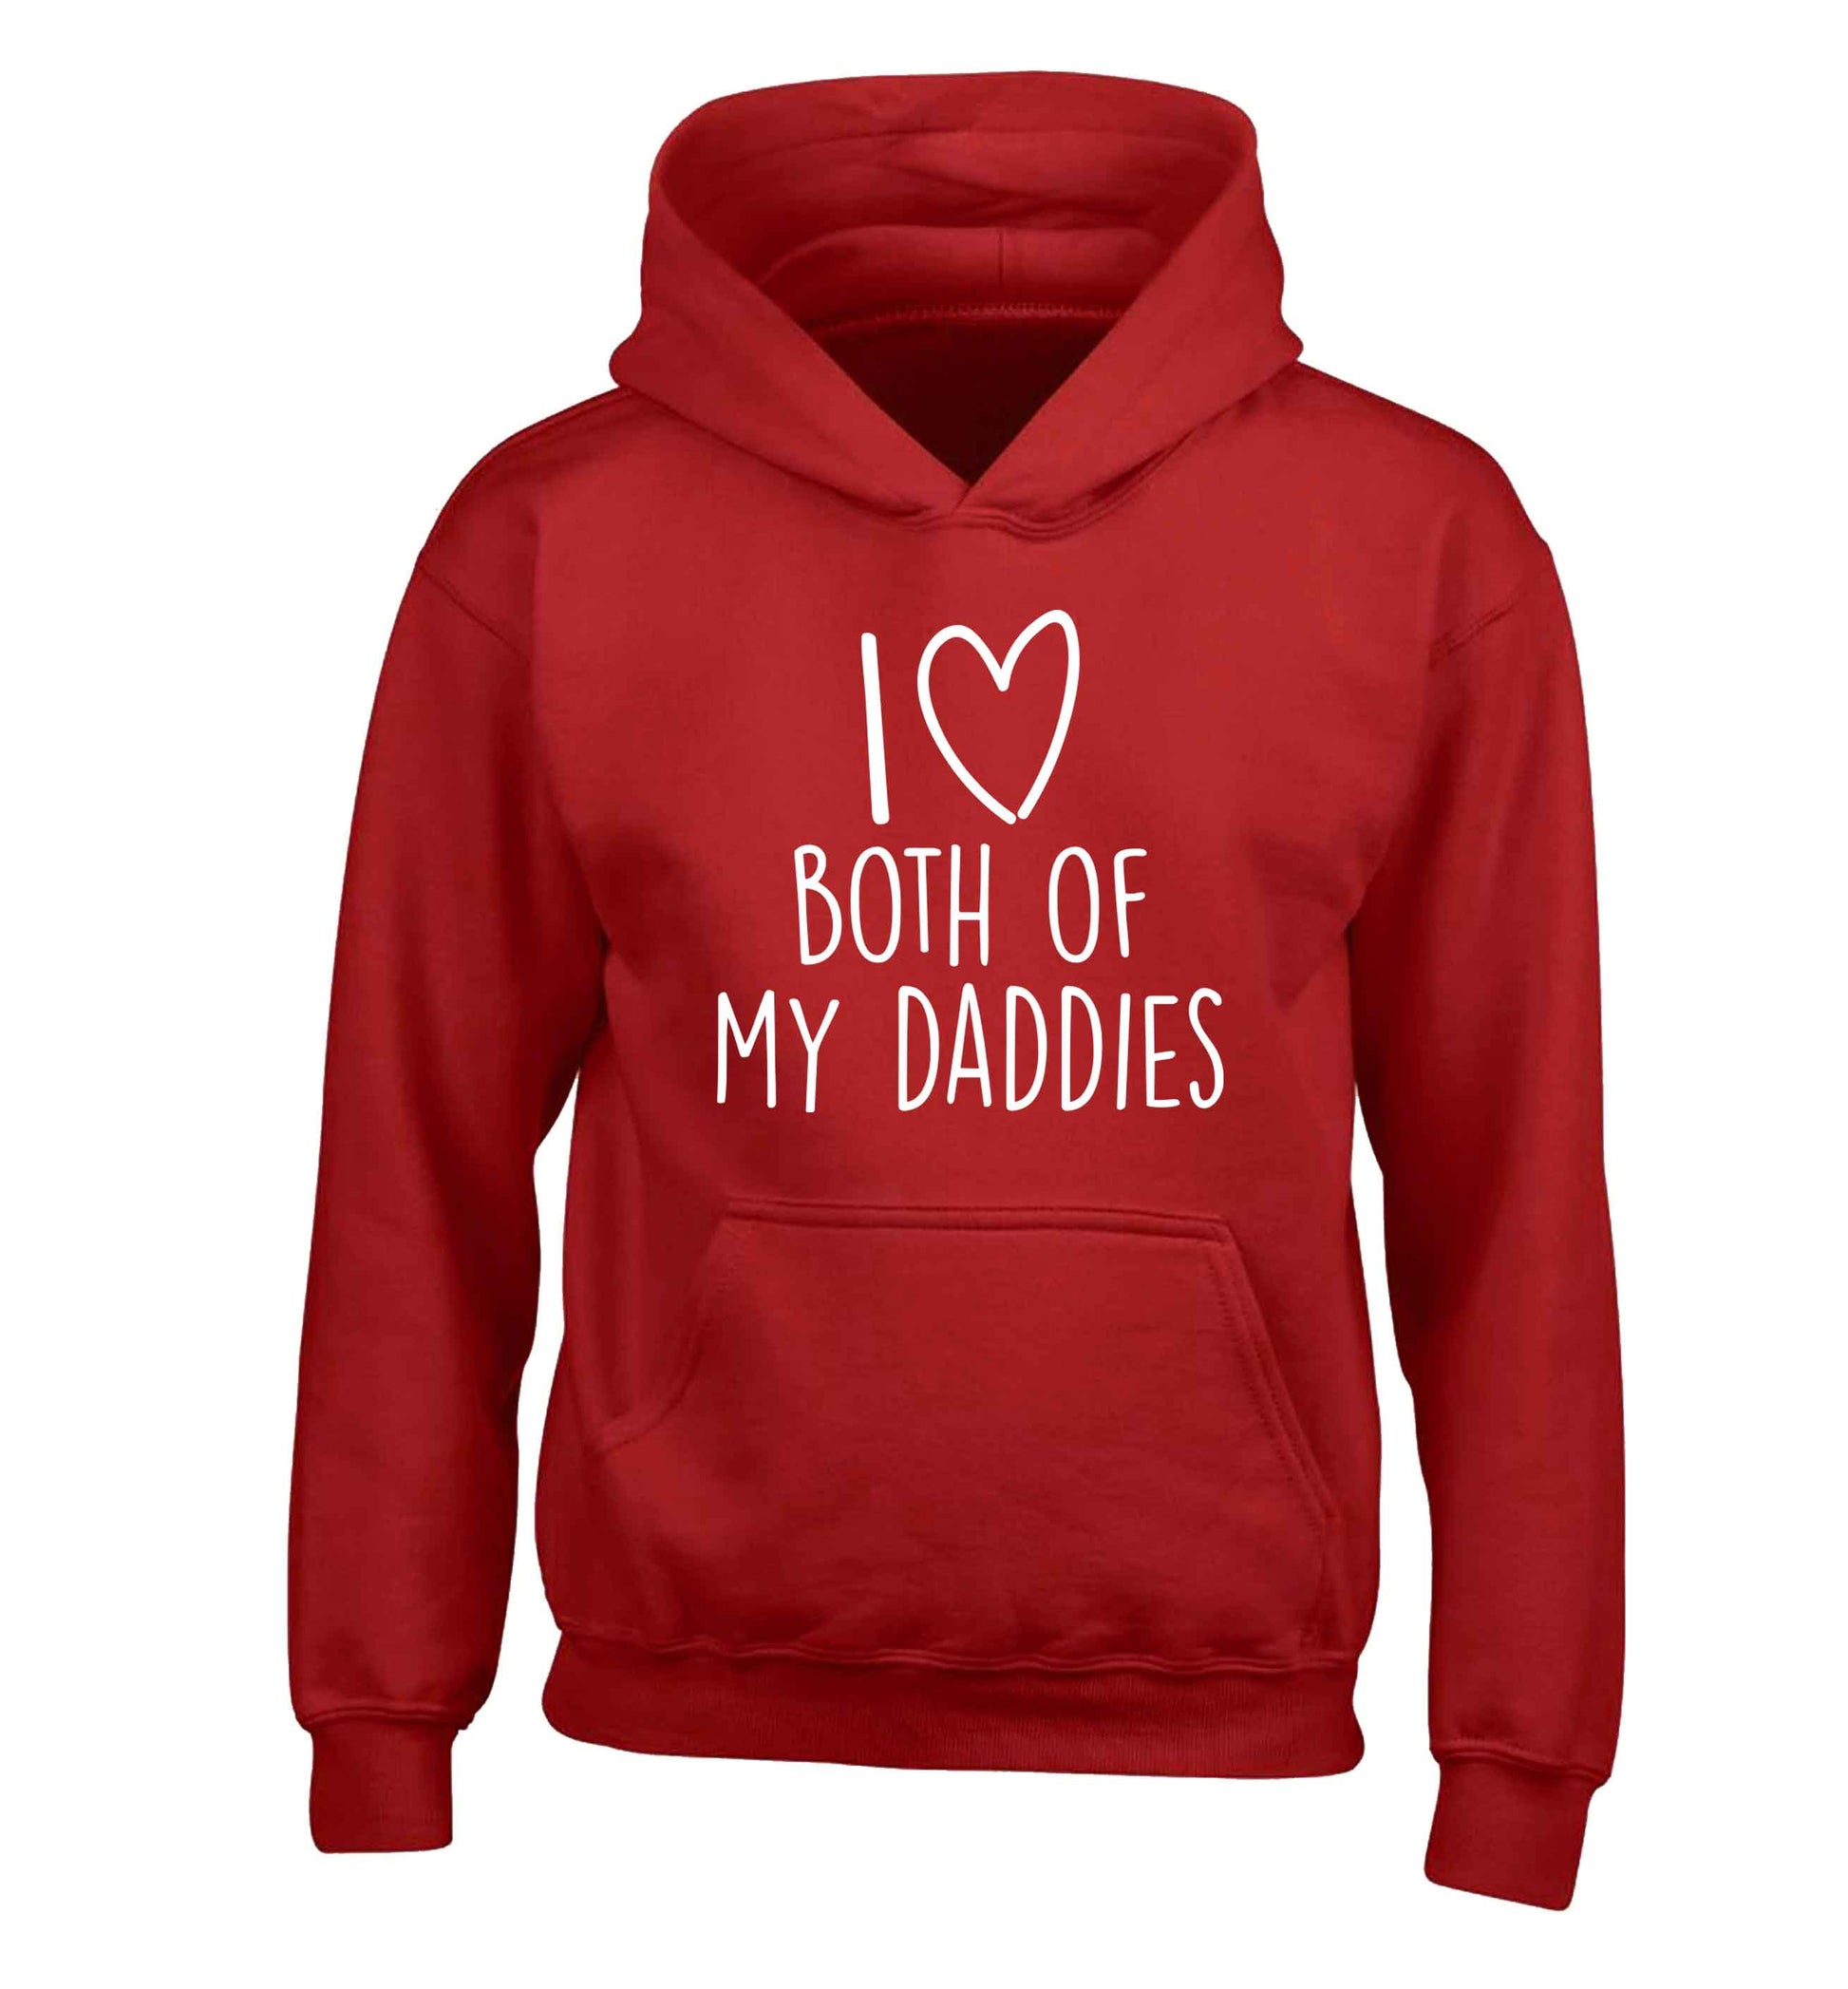 I love both of my daddies children's red hoodie 12-13 Years